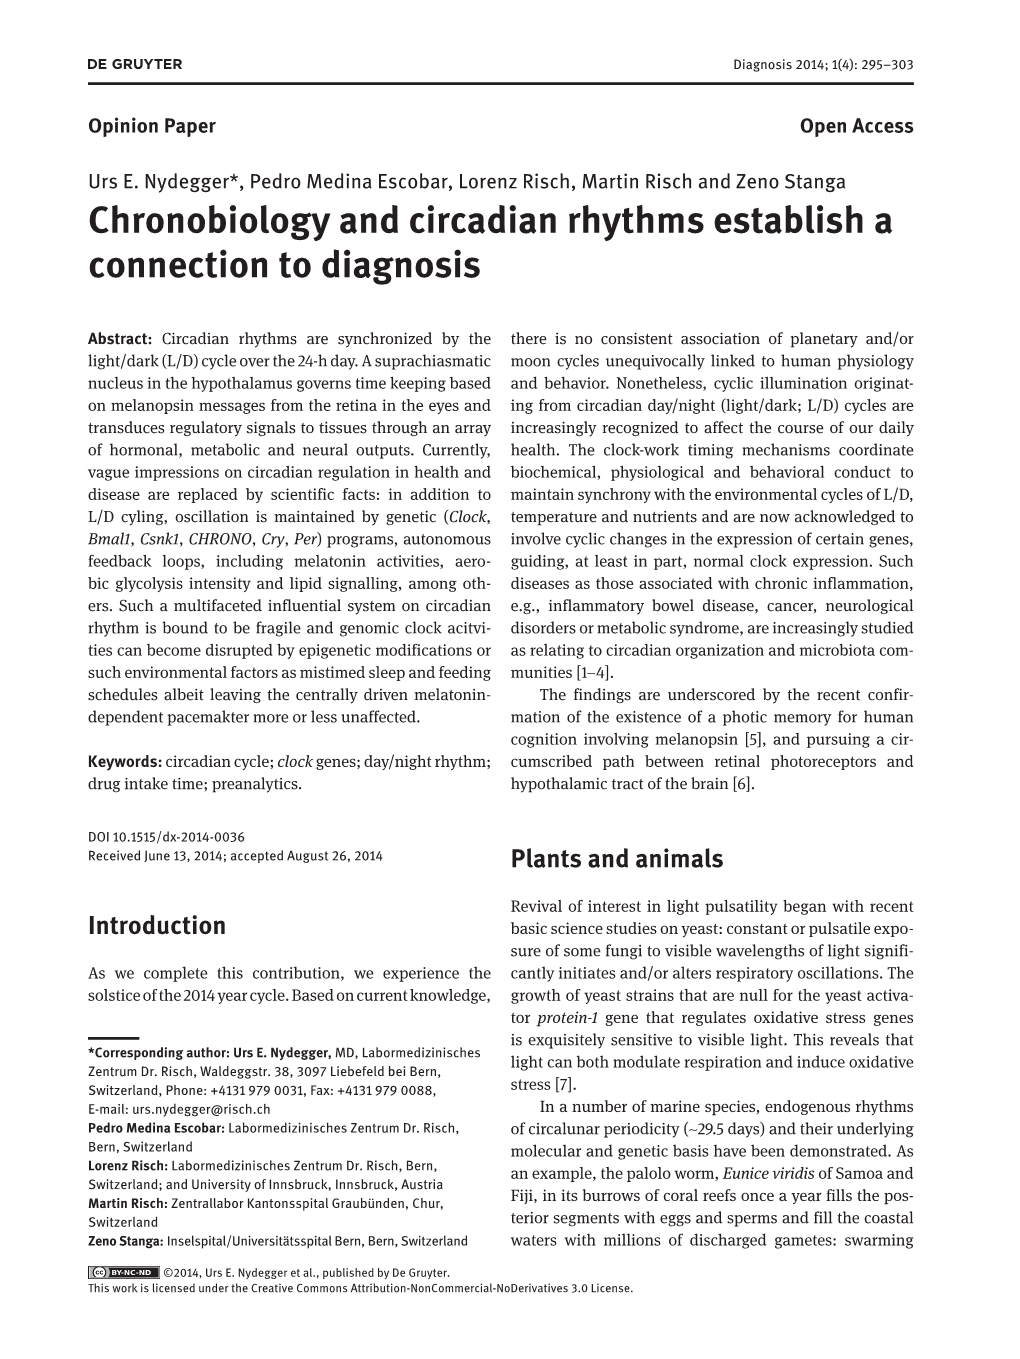 Chronobiology and Circadian Rhythms Establish a Connection to Diagnosis